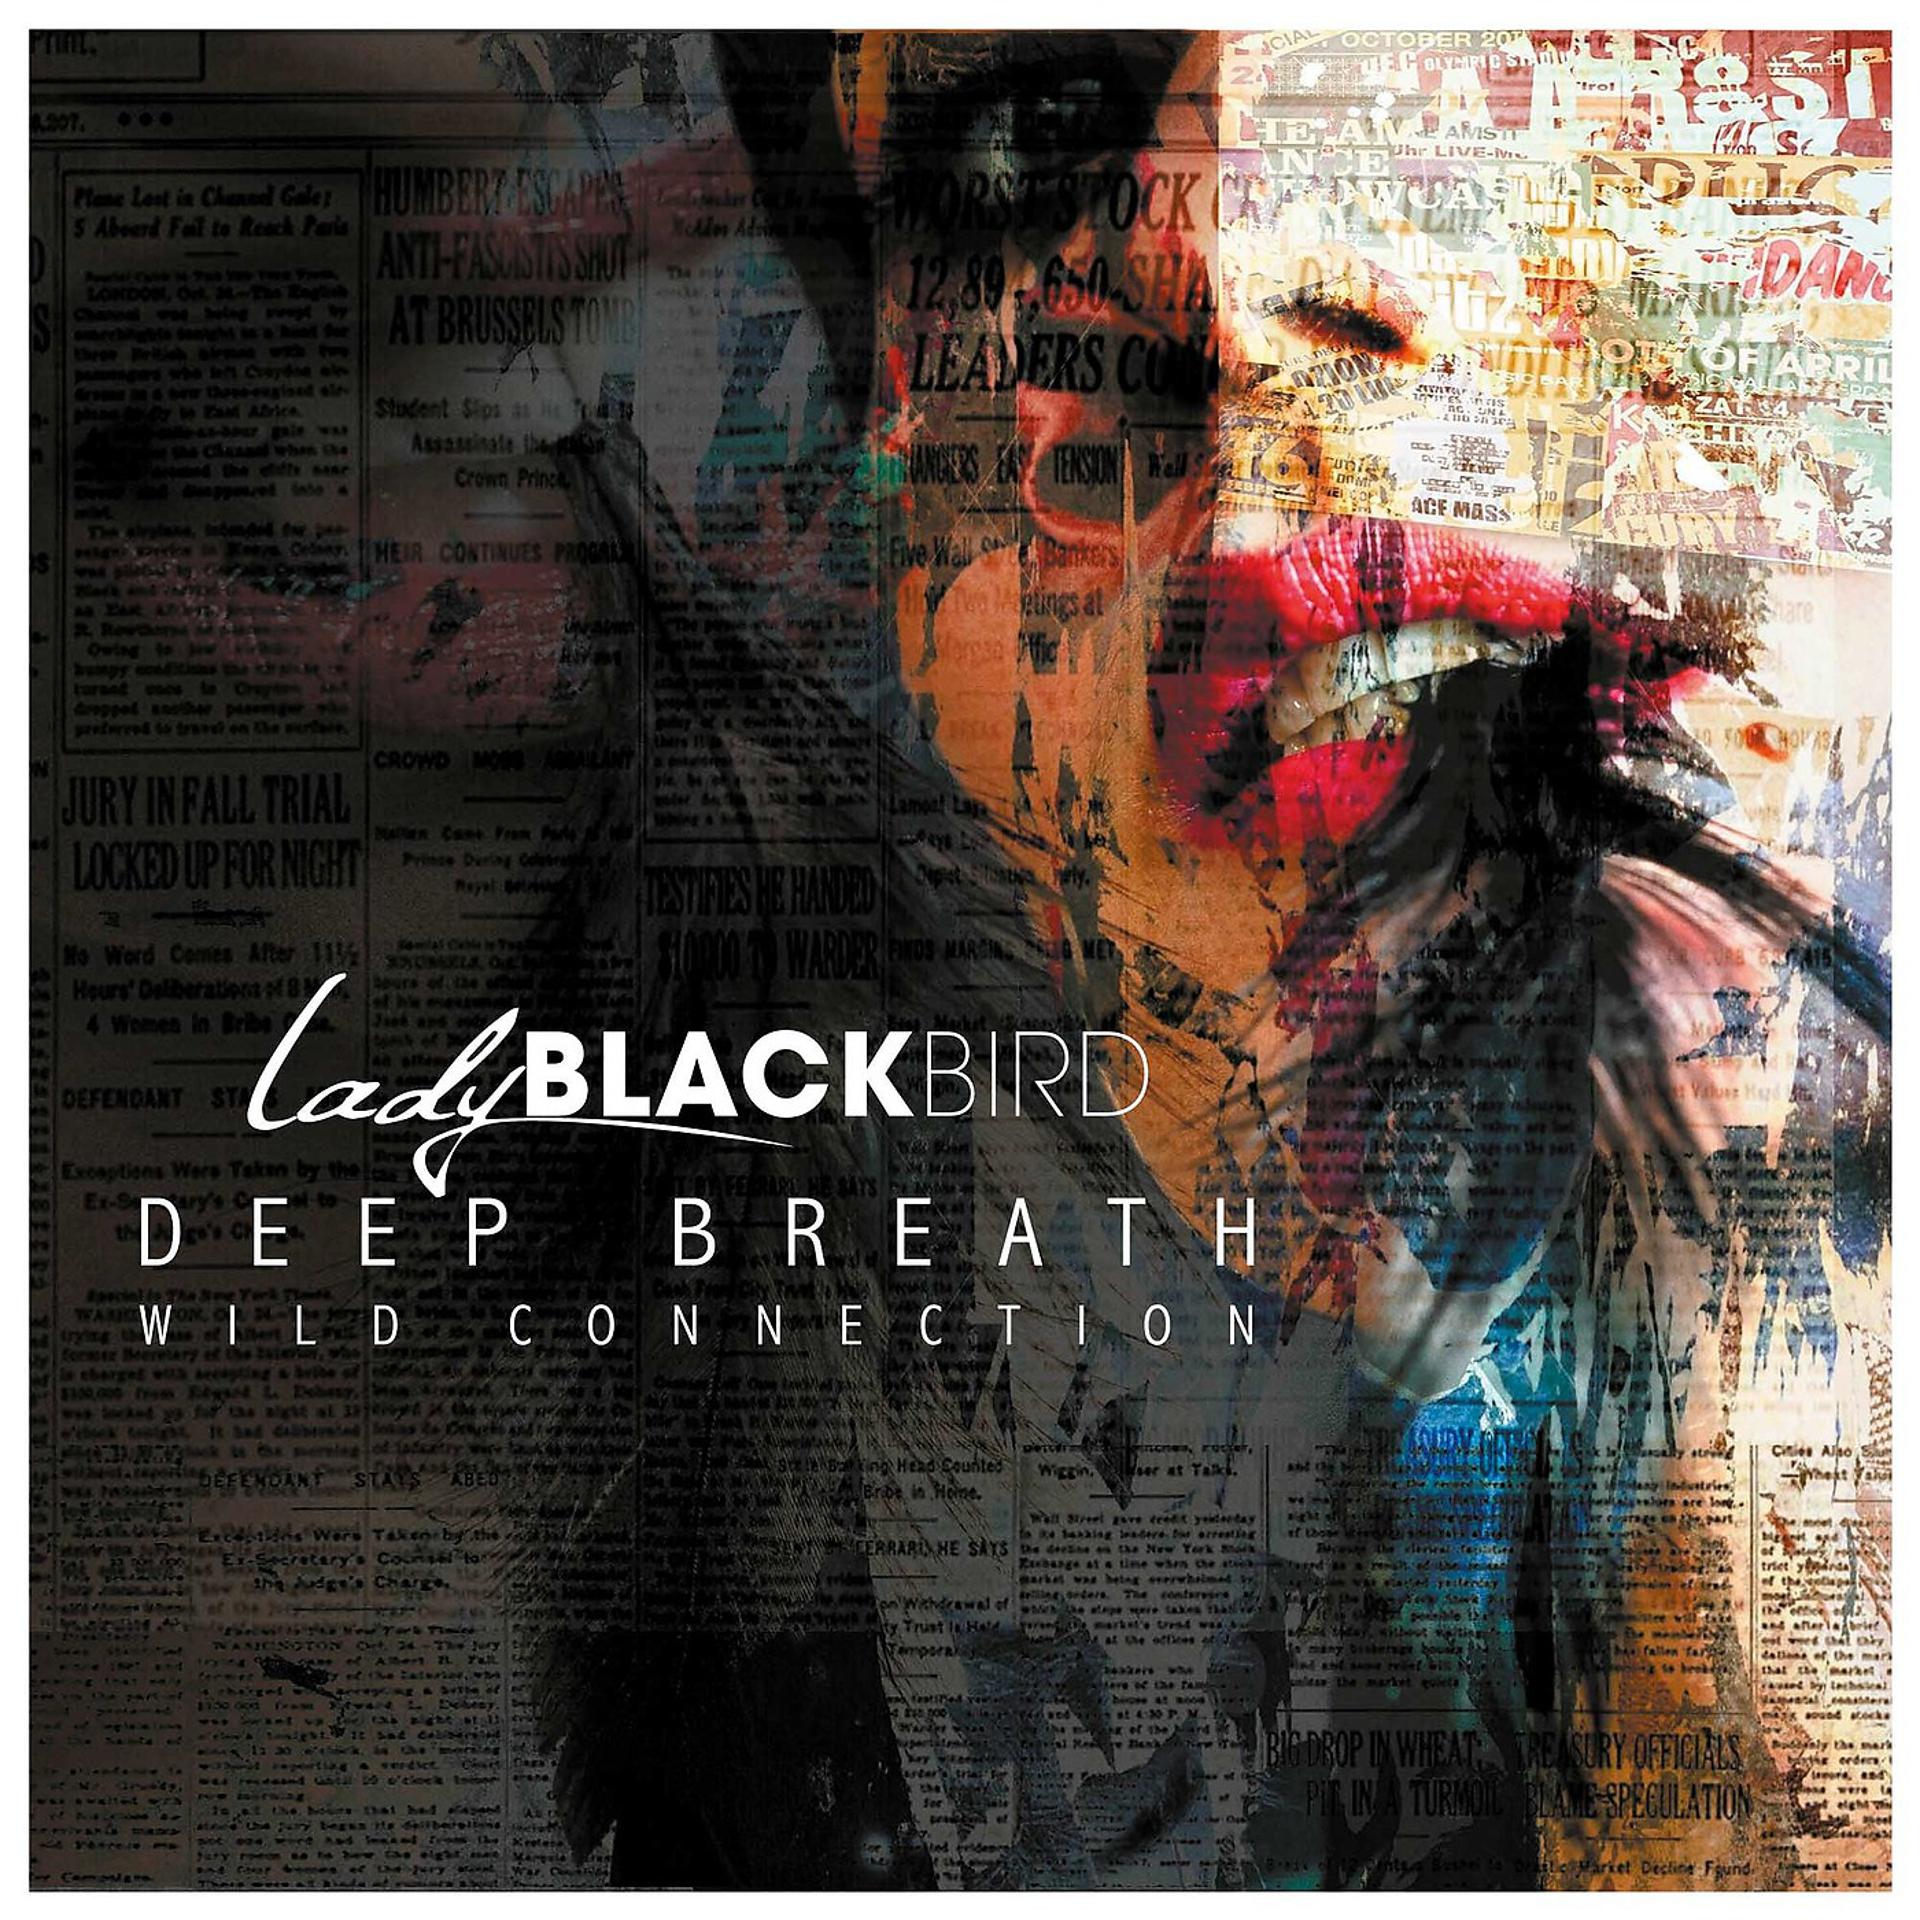 Постер к треку Lady BLACK BIRD - Shape of You